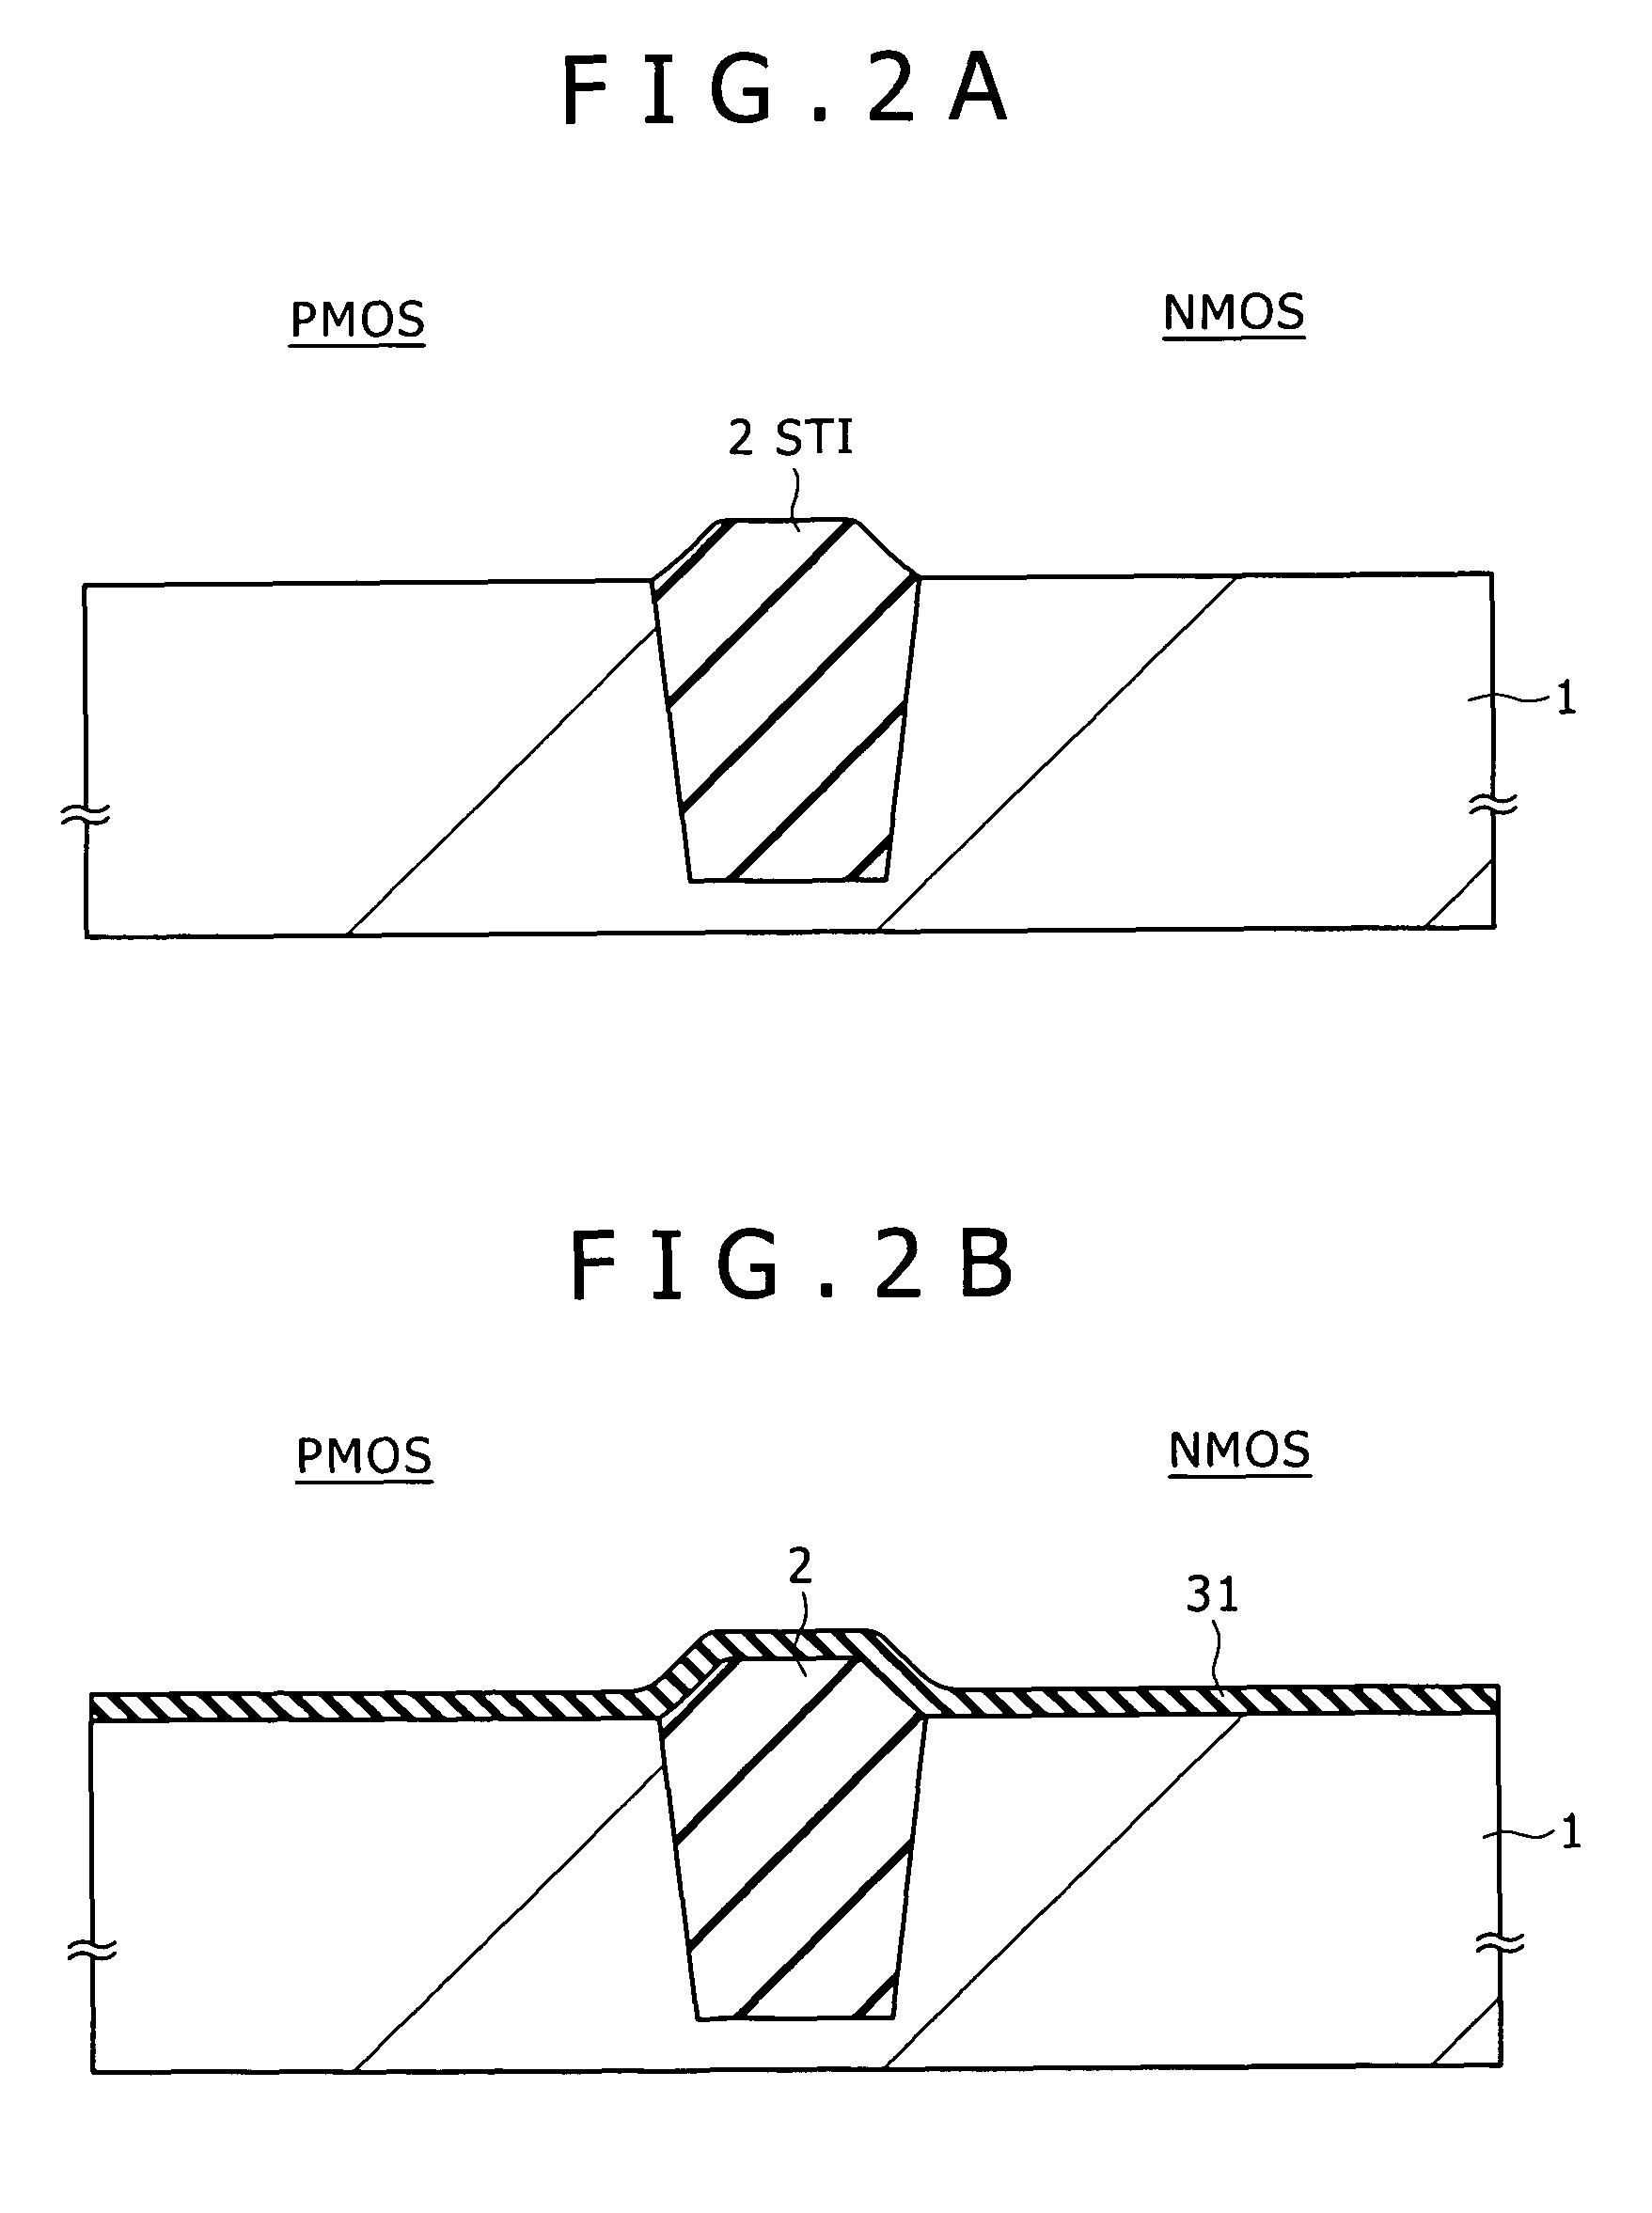 Insulated gate field-effect transistor